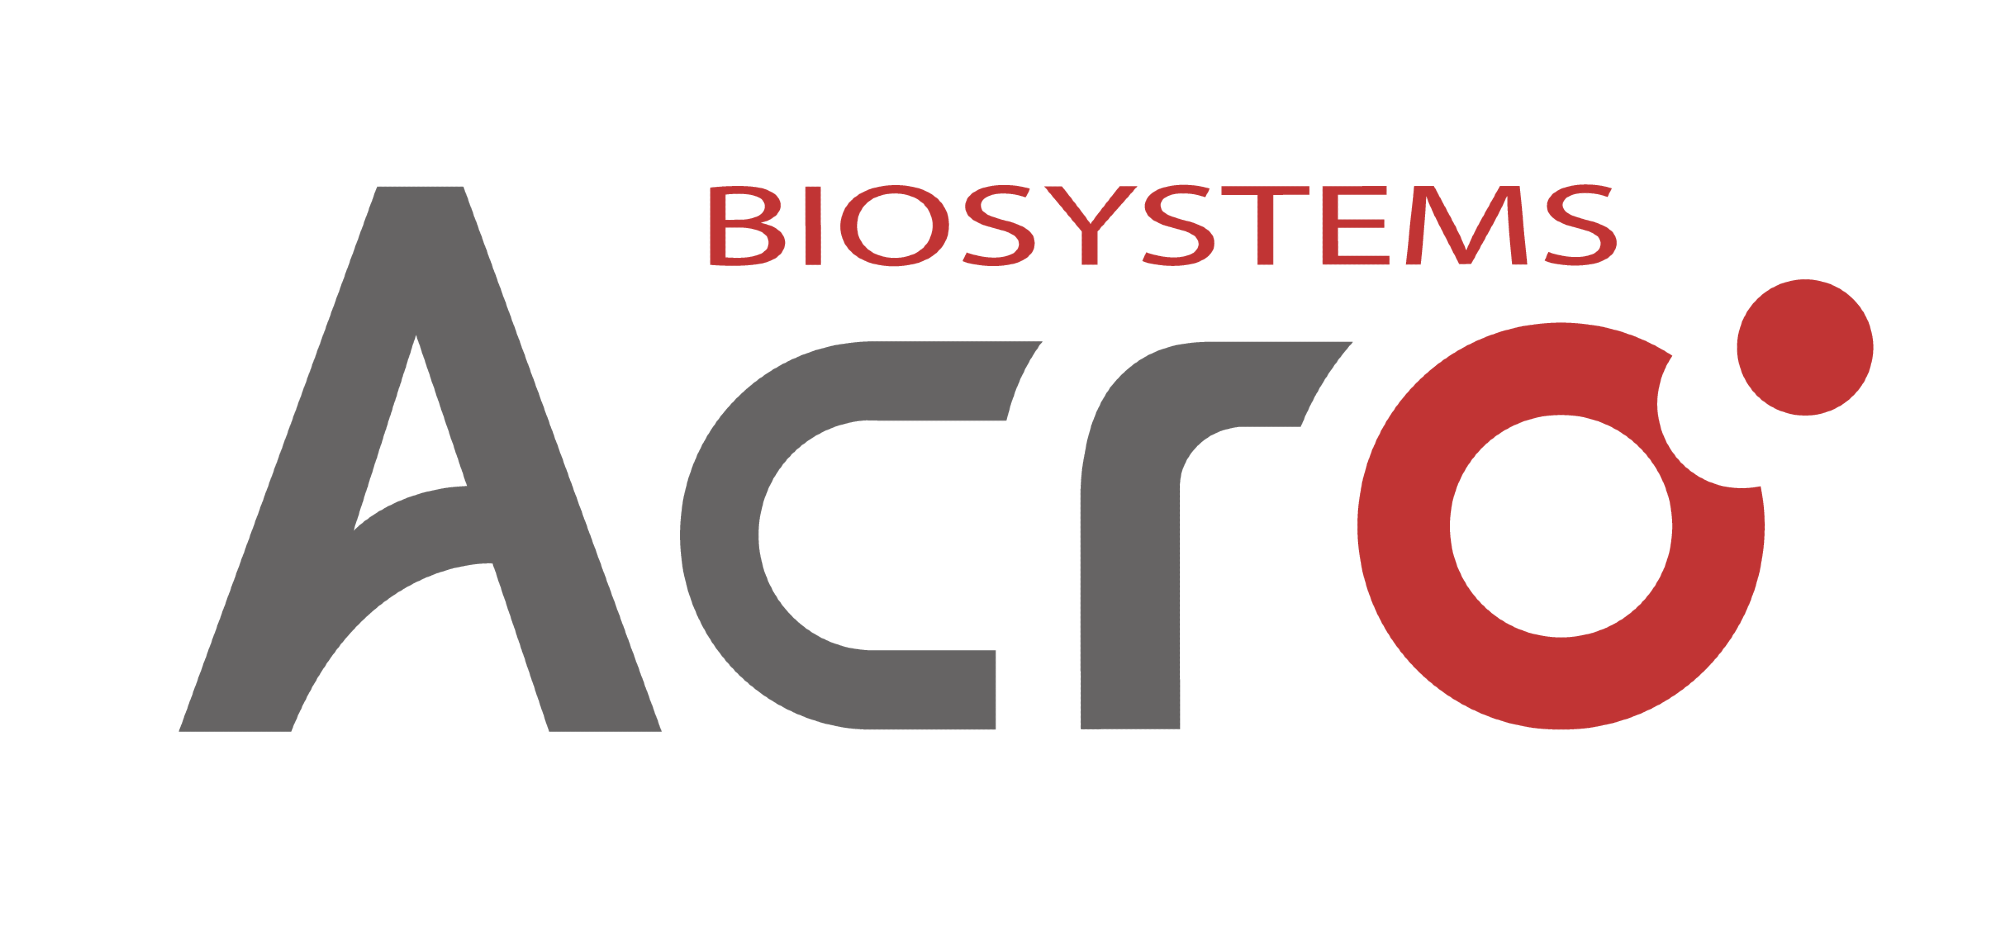 Aneuro - An ACROBiosystems Brand